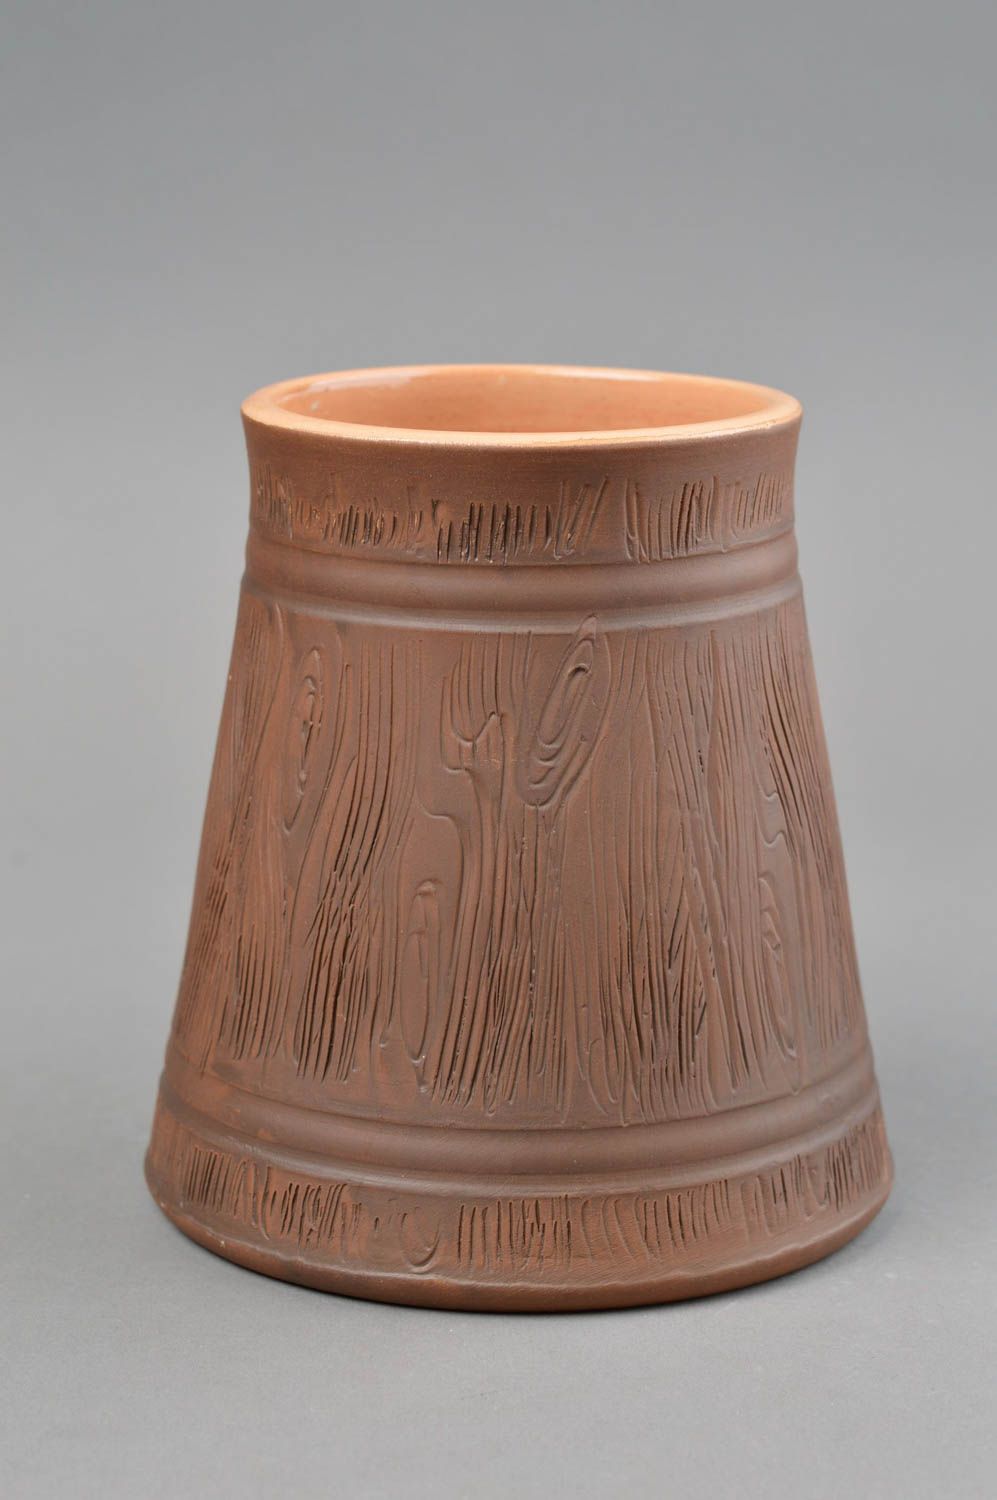 16 oz ceramic large clay drinking mug 1,26 lb photo 2